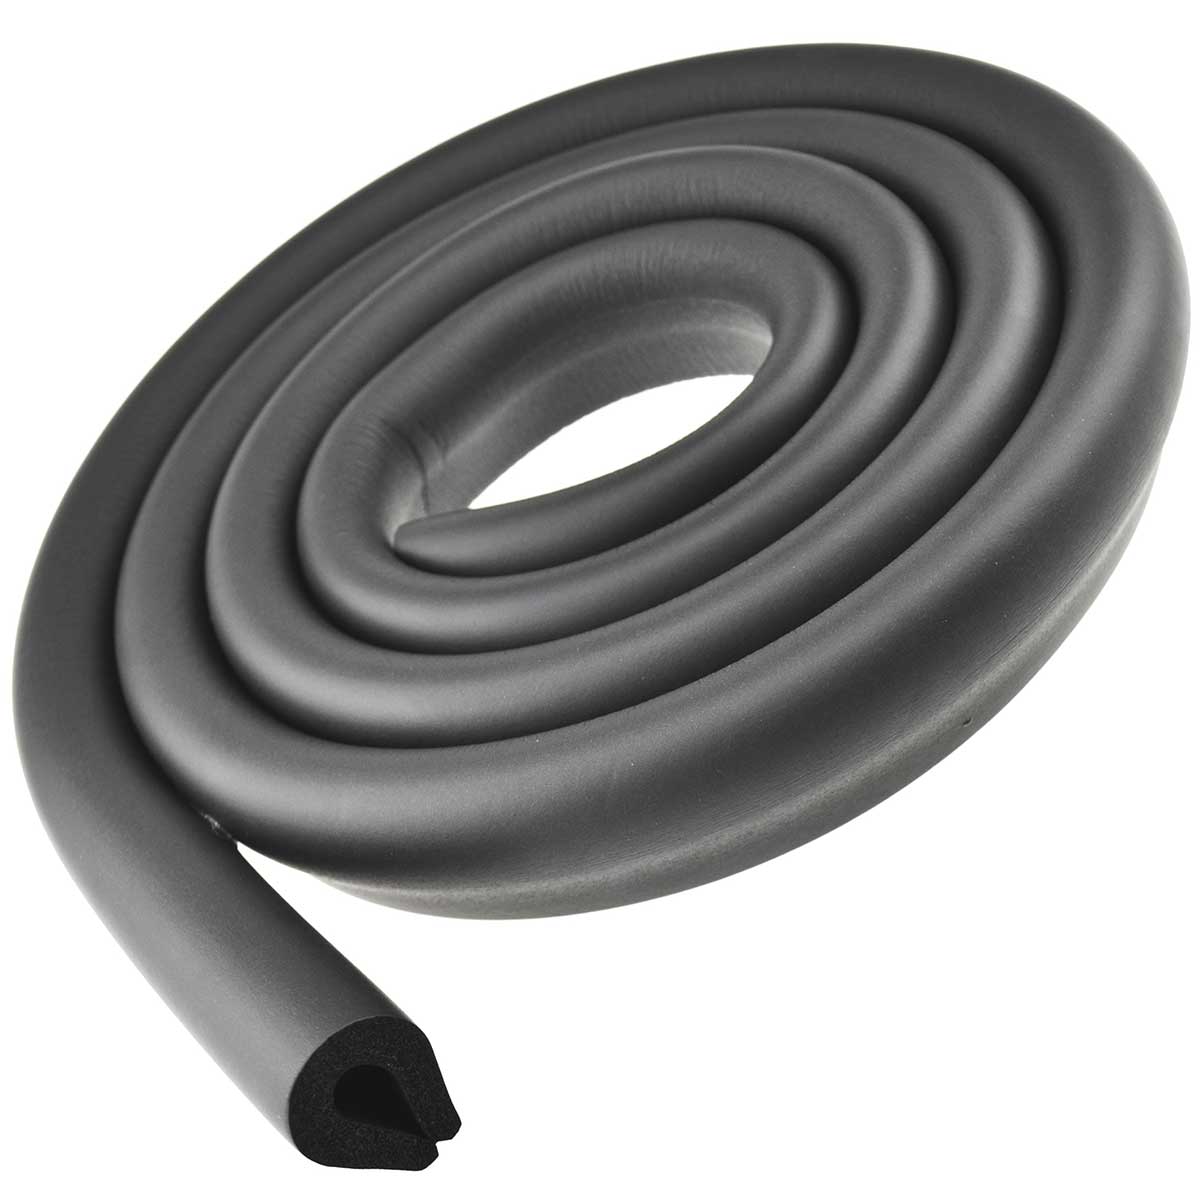 foam-board edge protector